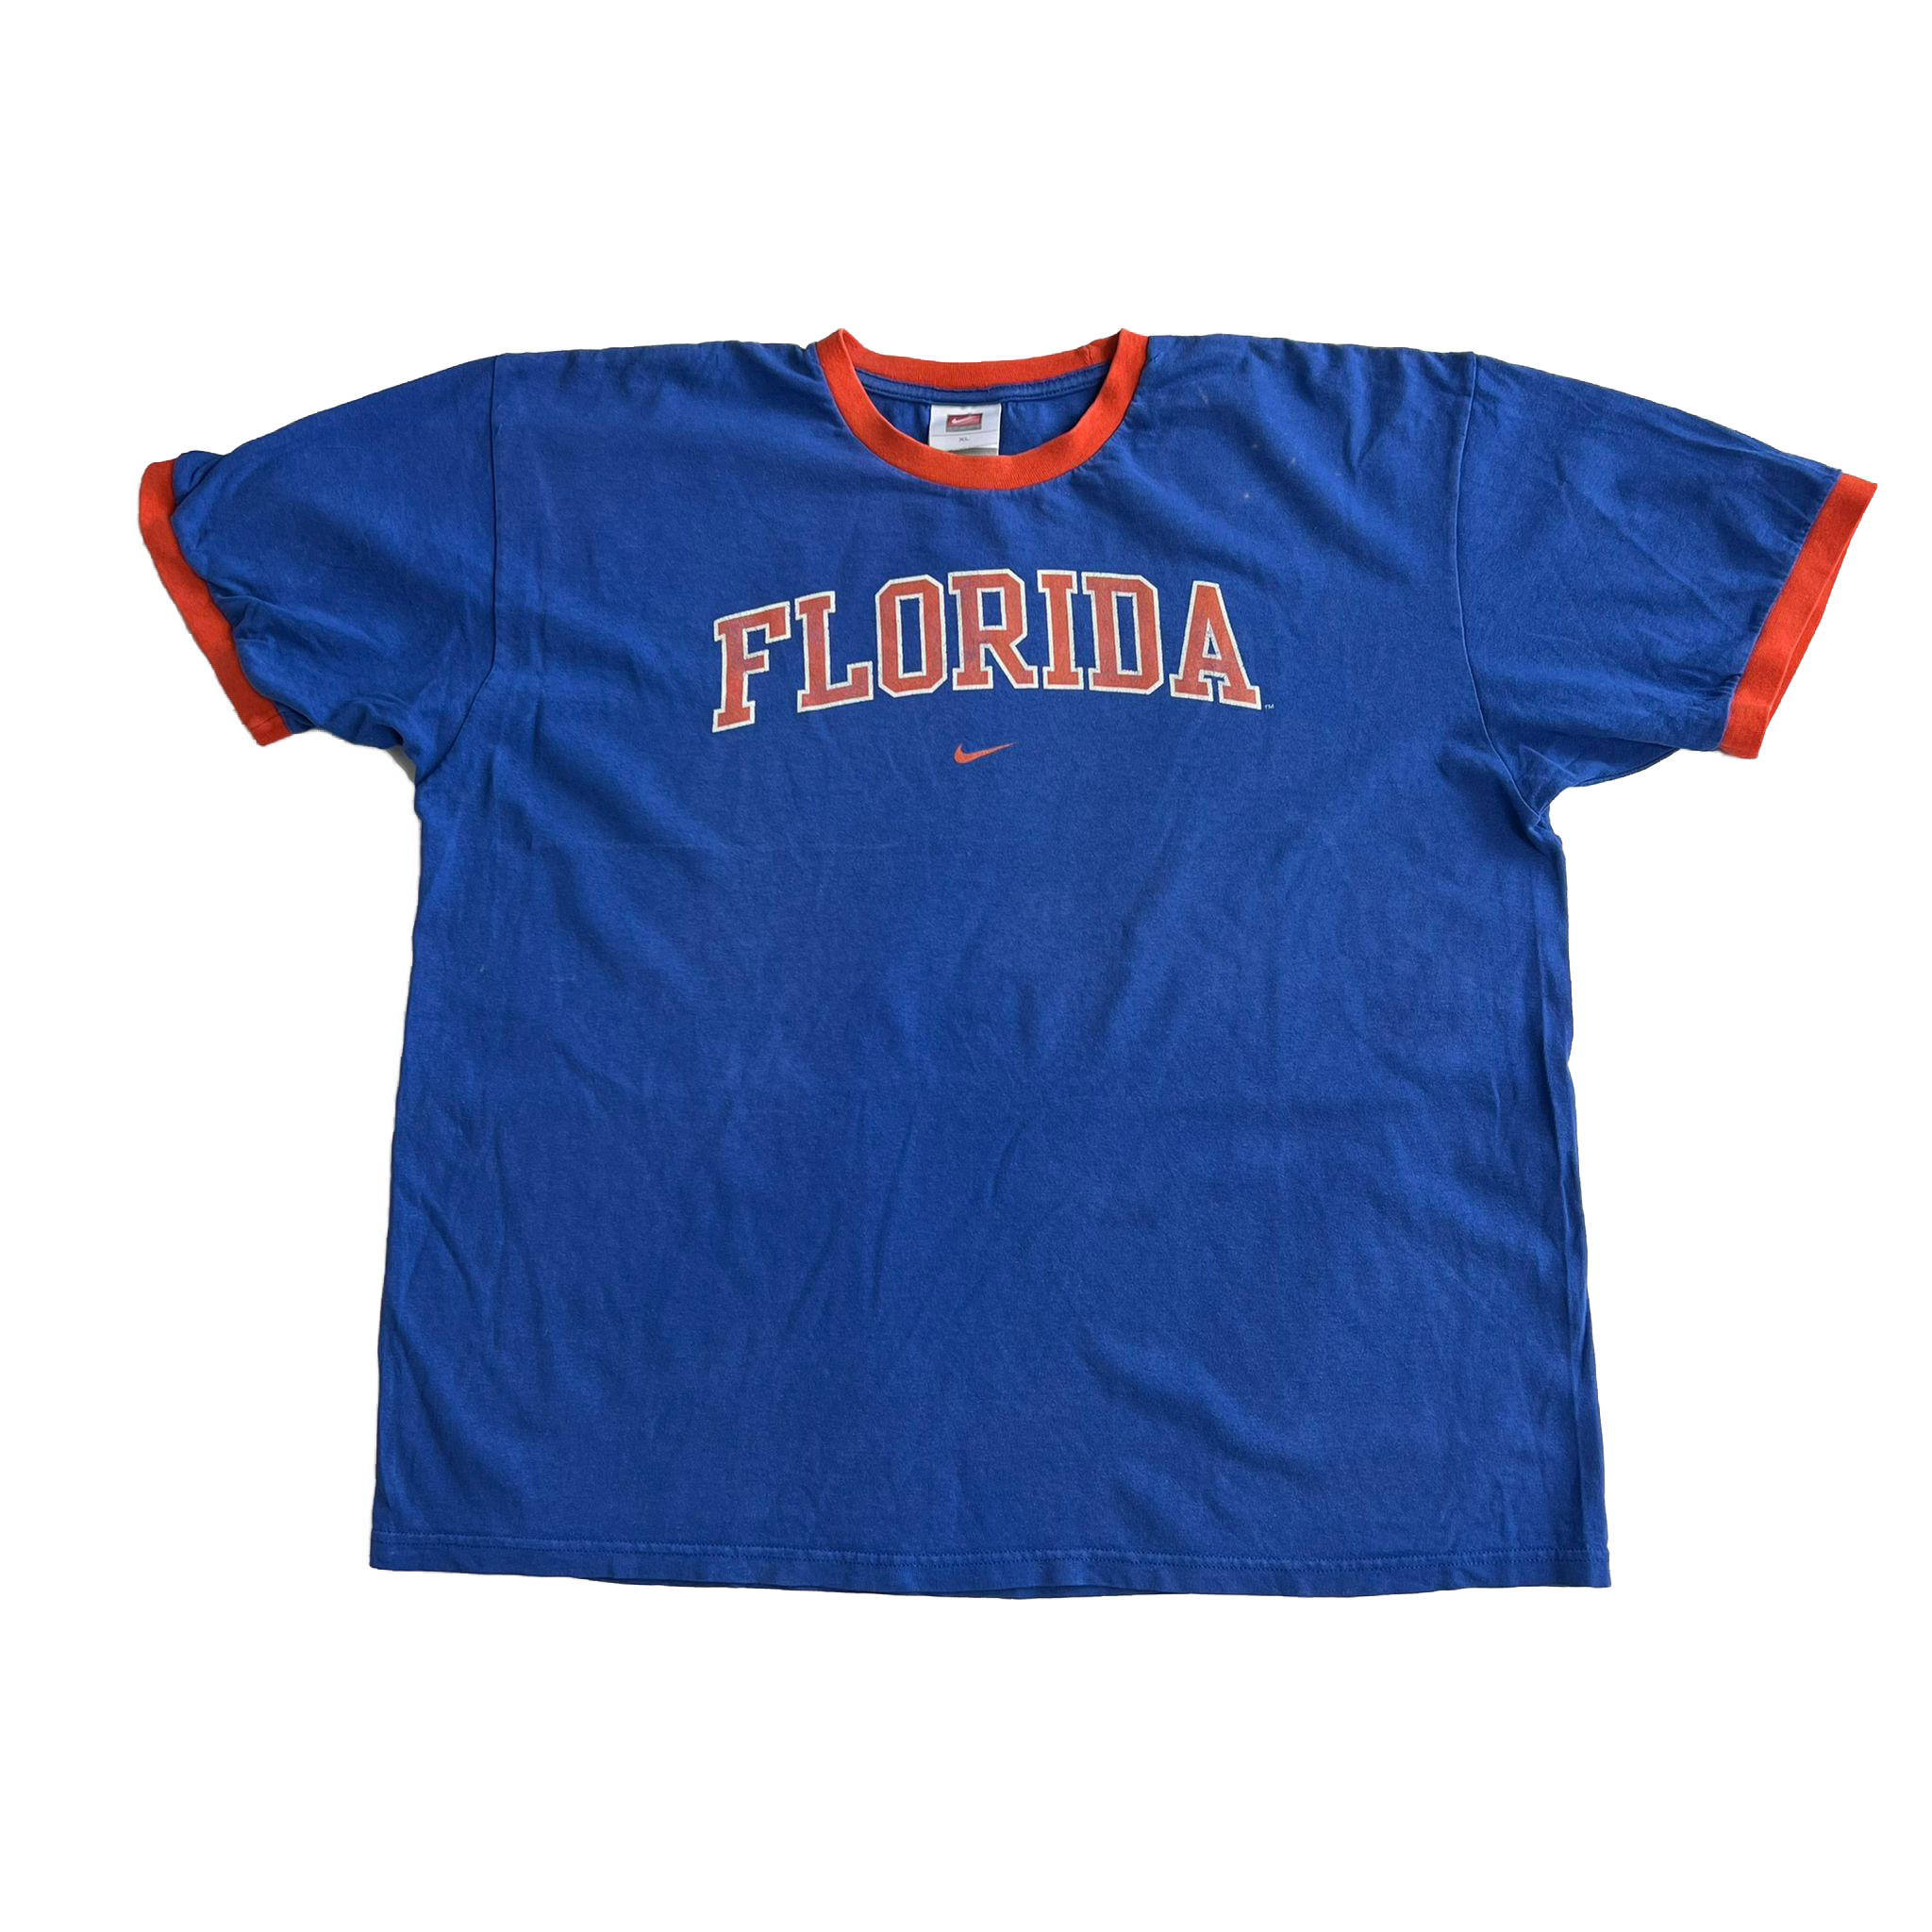 00's Nike Florida t-shirt